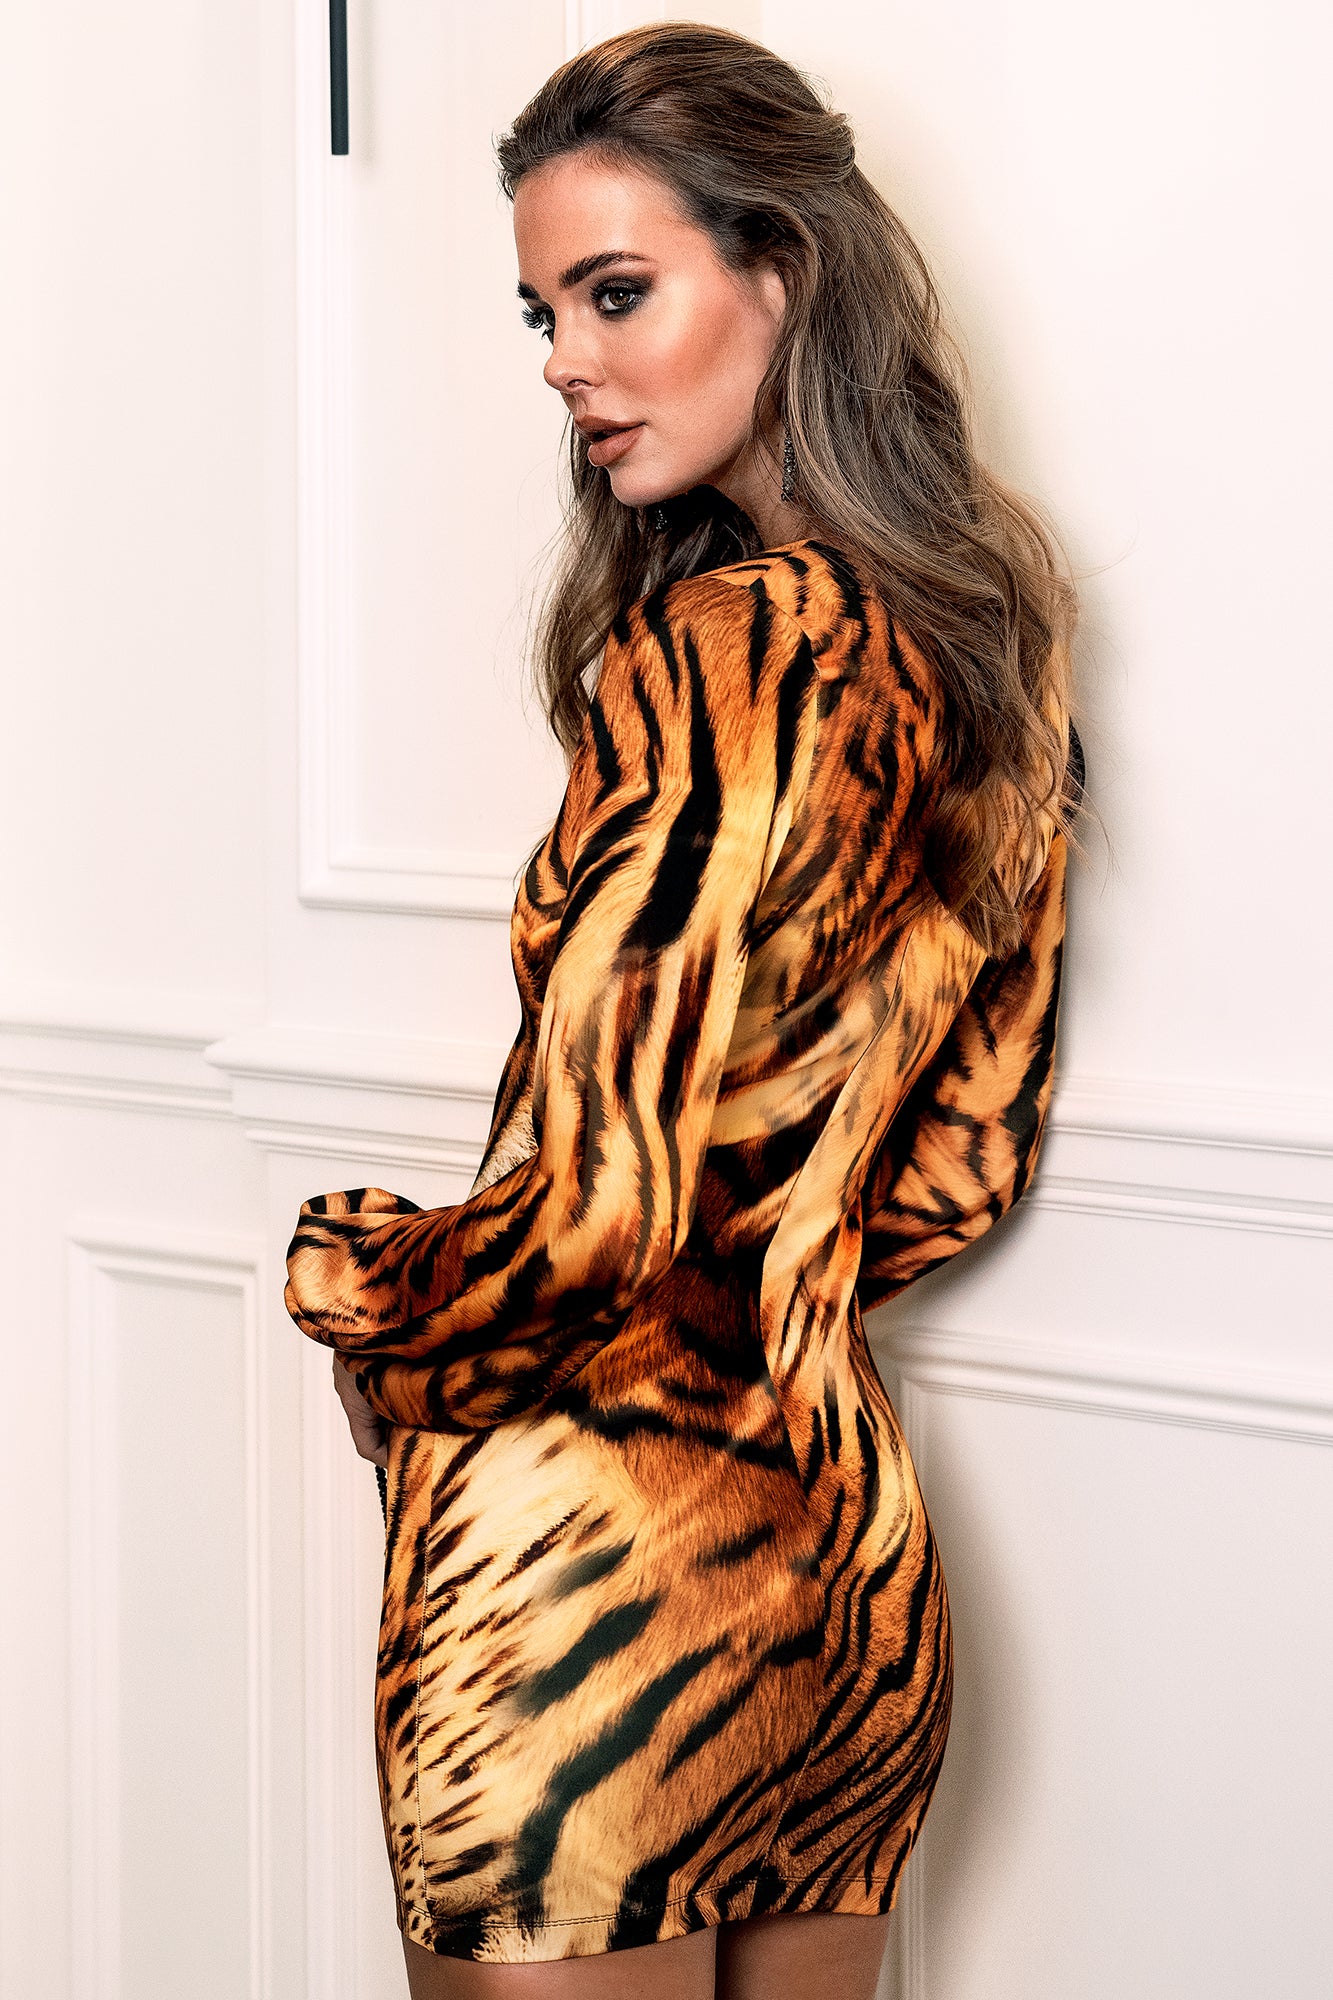 Tiger print dress design 2022 || Tiger print outfits - YouTube